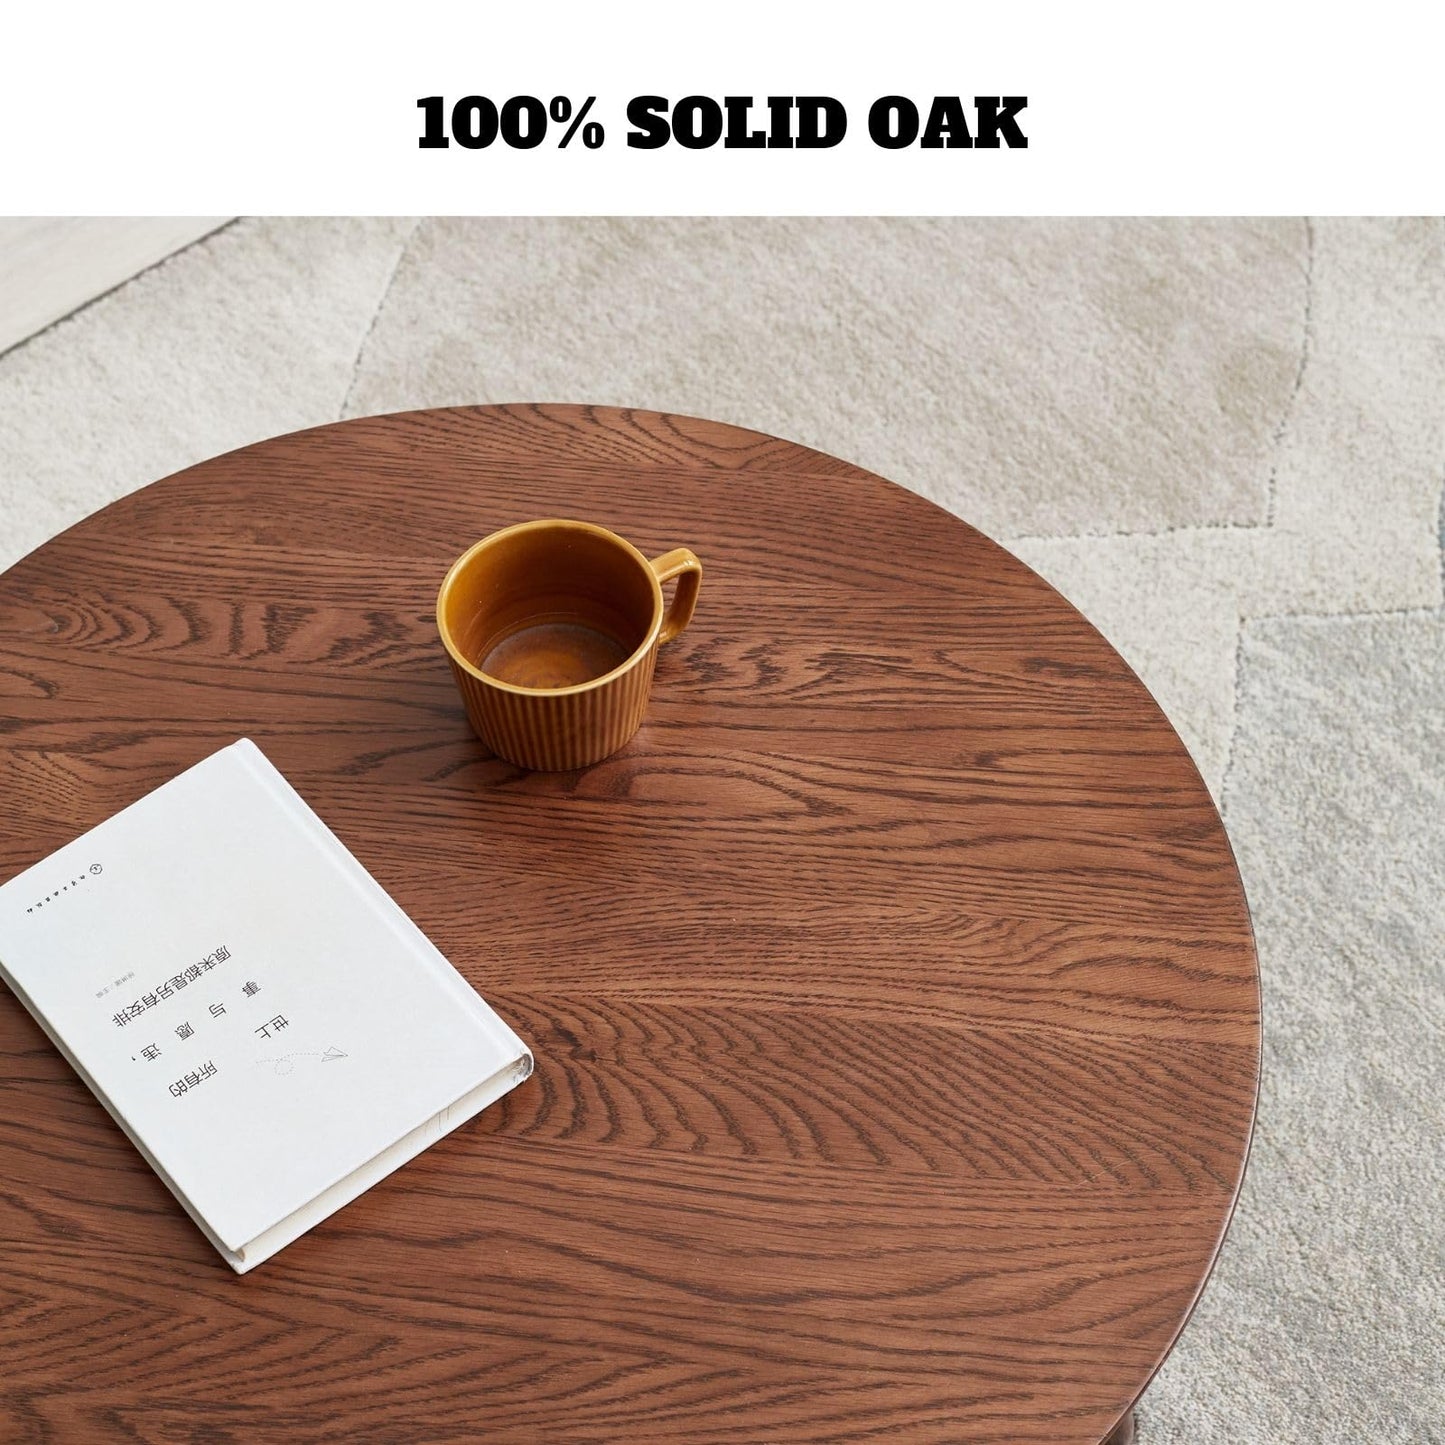 Vadisun 100% FAS Solid Oak Wood Mini Coffee Table - Natural Walnut Finish Round Coffee Table-Low Tea Table